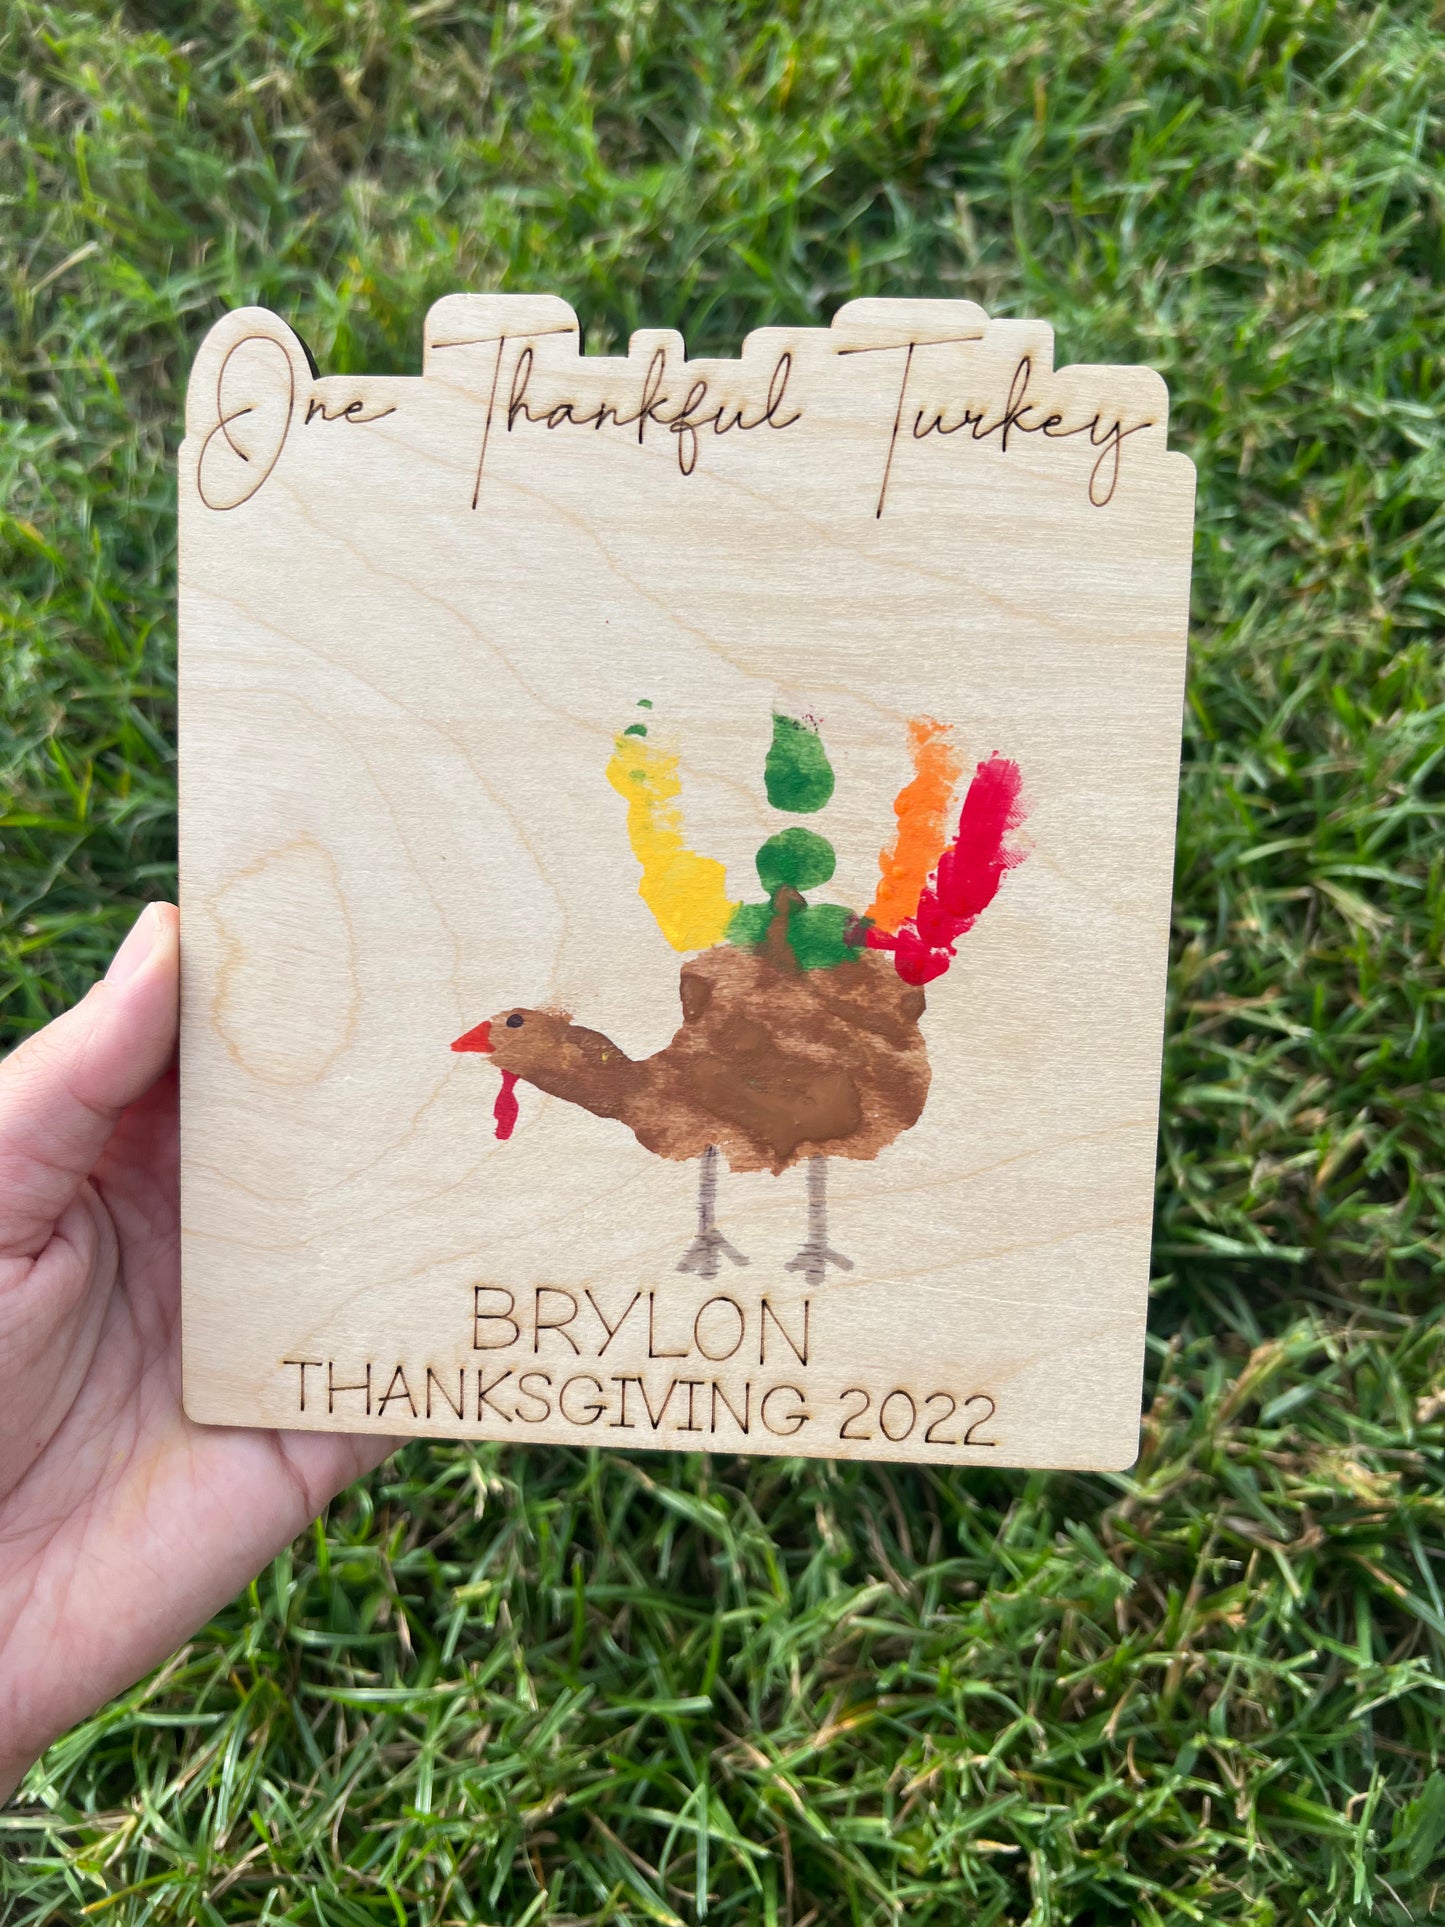 One Thankful Turkey - Early Bird